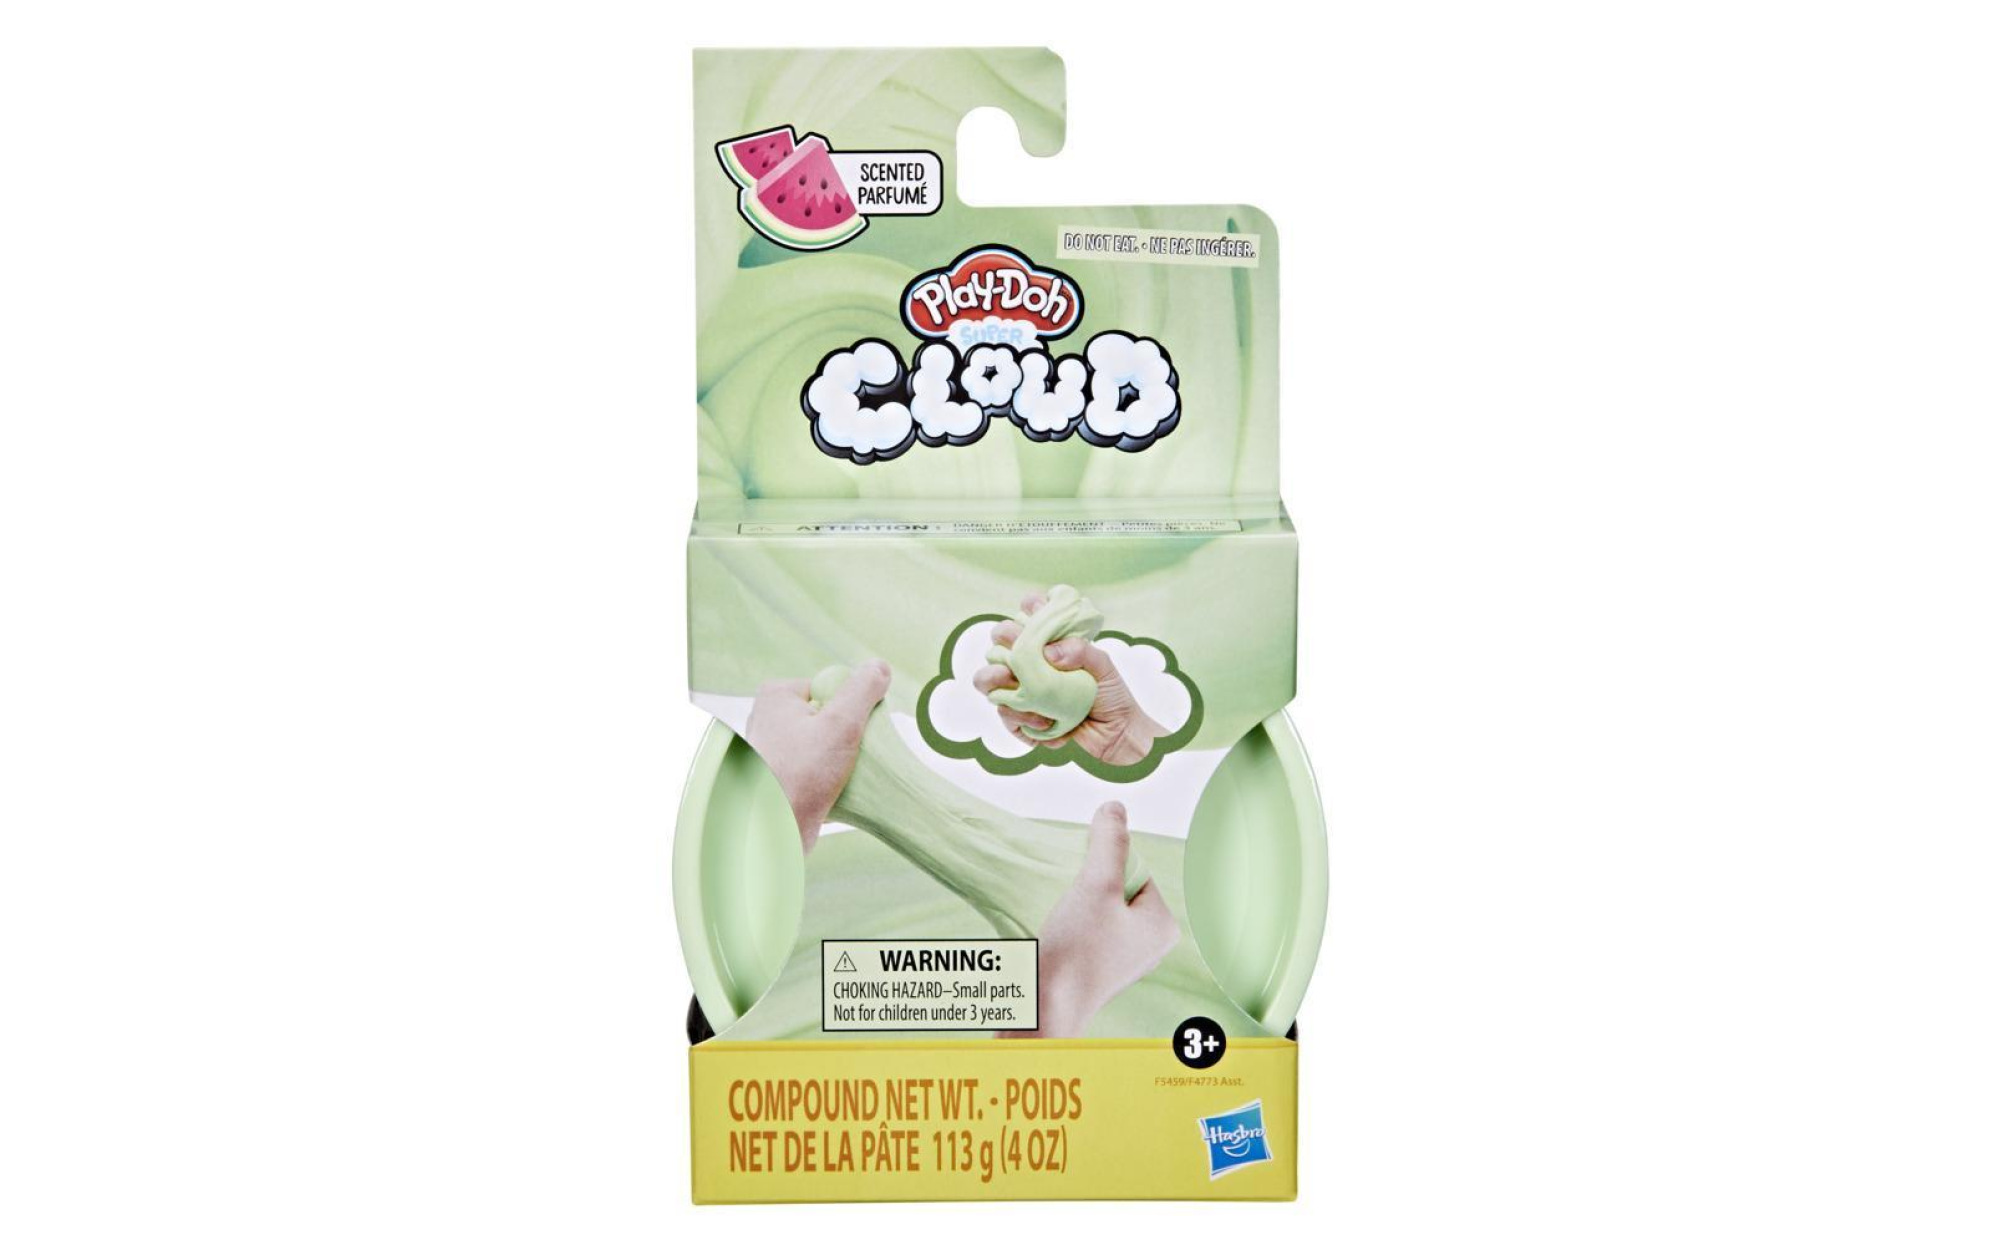 Play-Doh Super Cloud Green (Scented) – Sensory